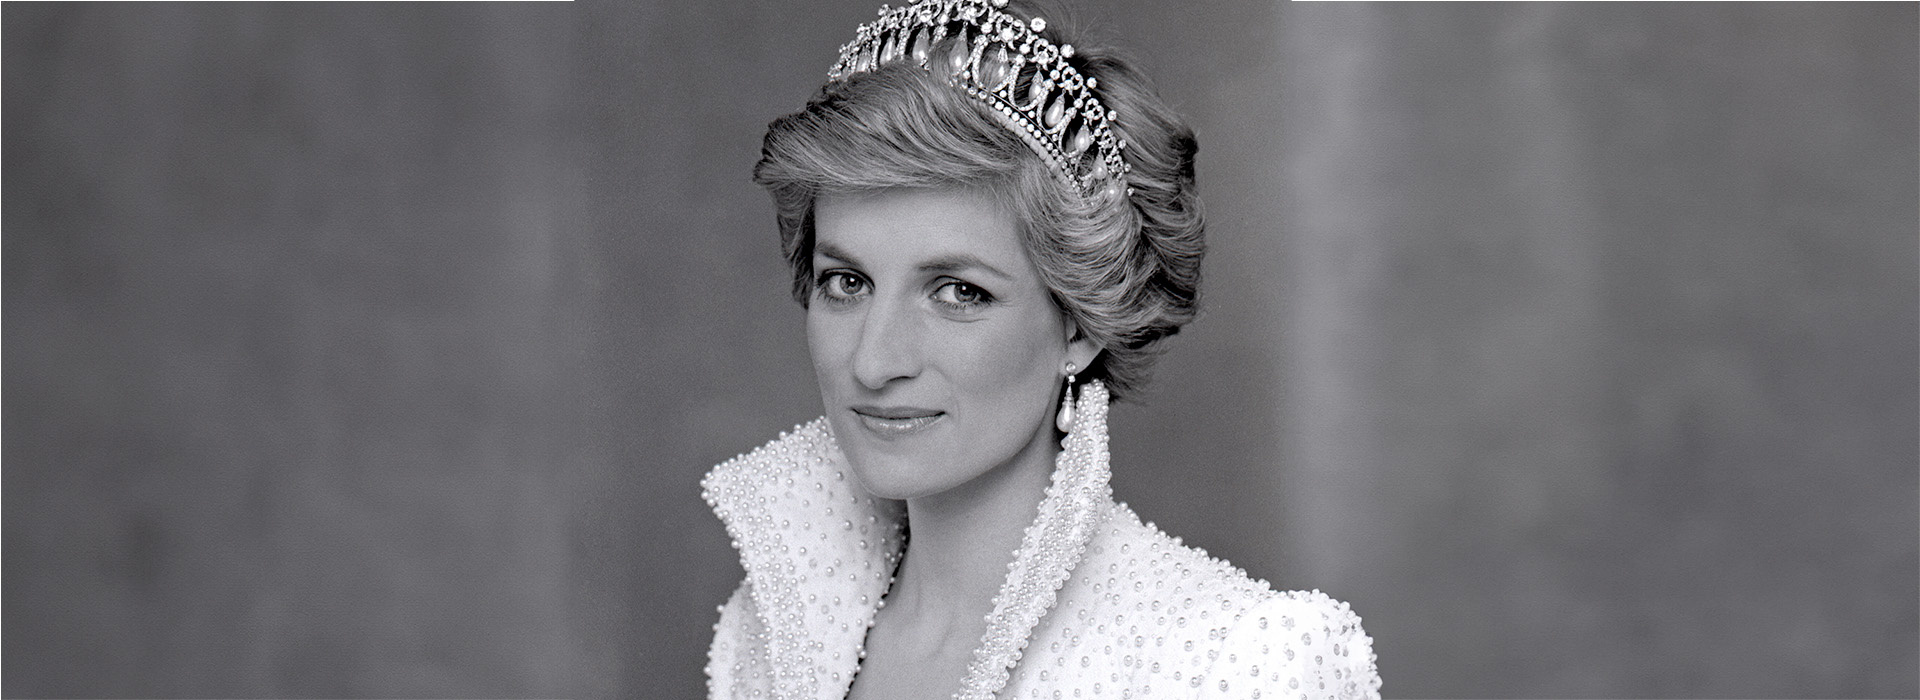 Movie poster Princess Diana: Who Do You Think She Was